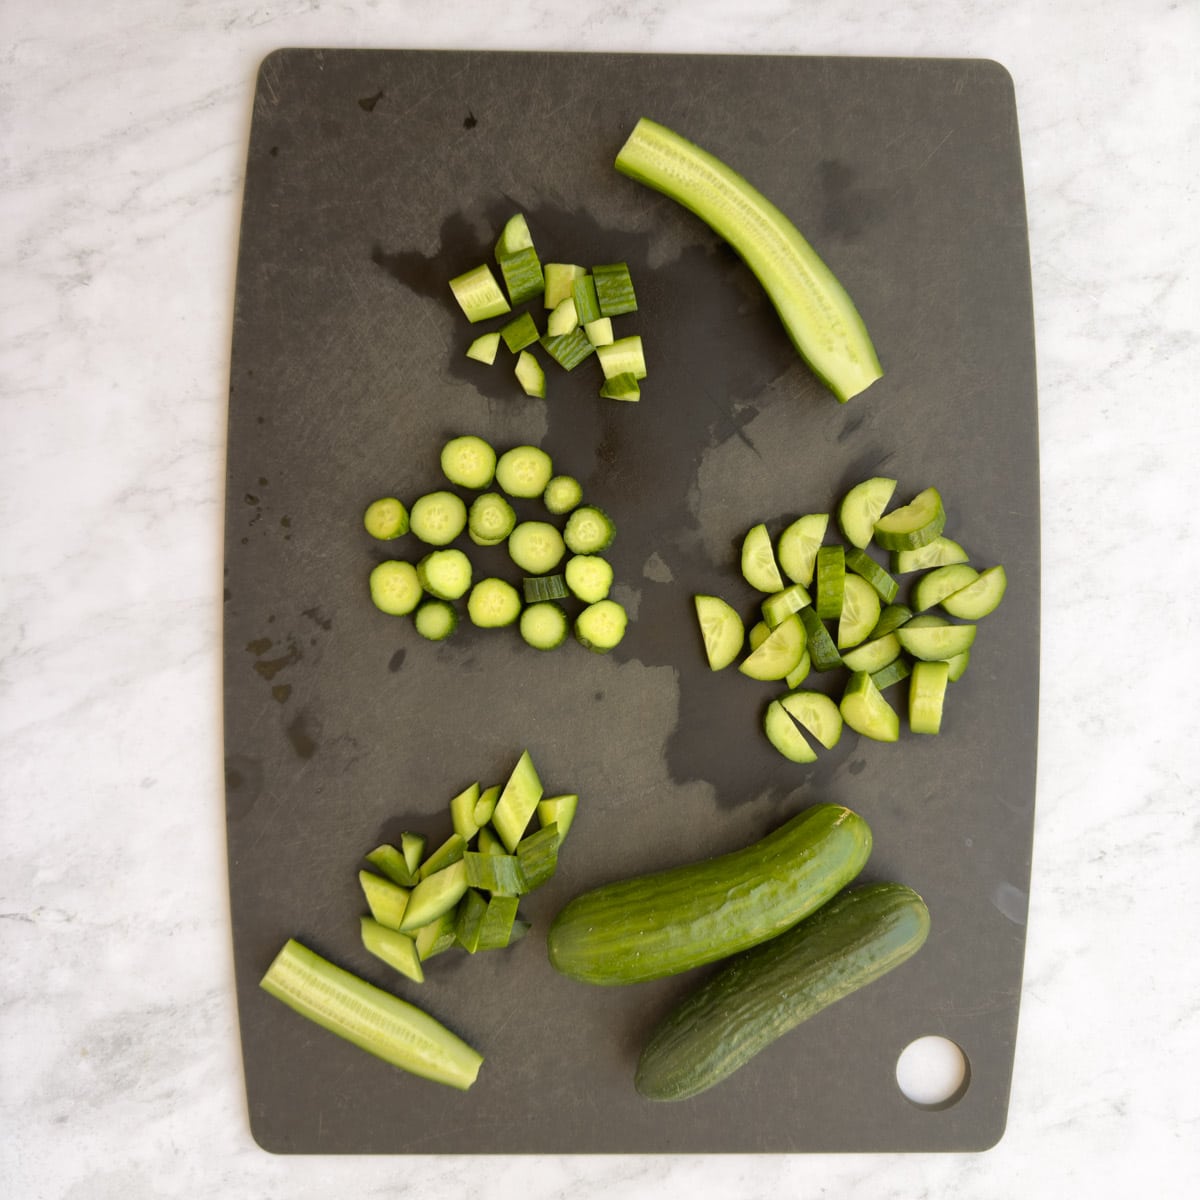 Cucumbers on a black cutting board cut in different ways.